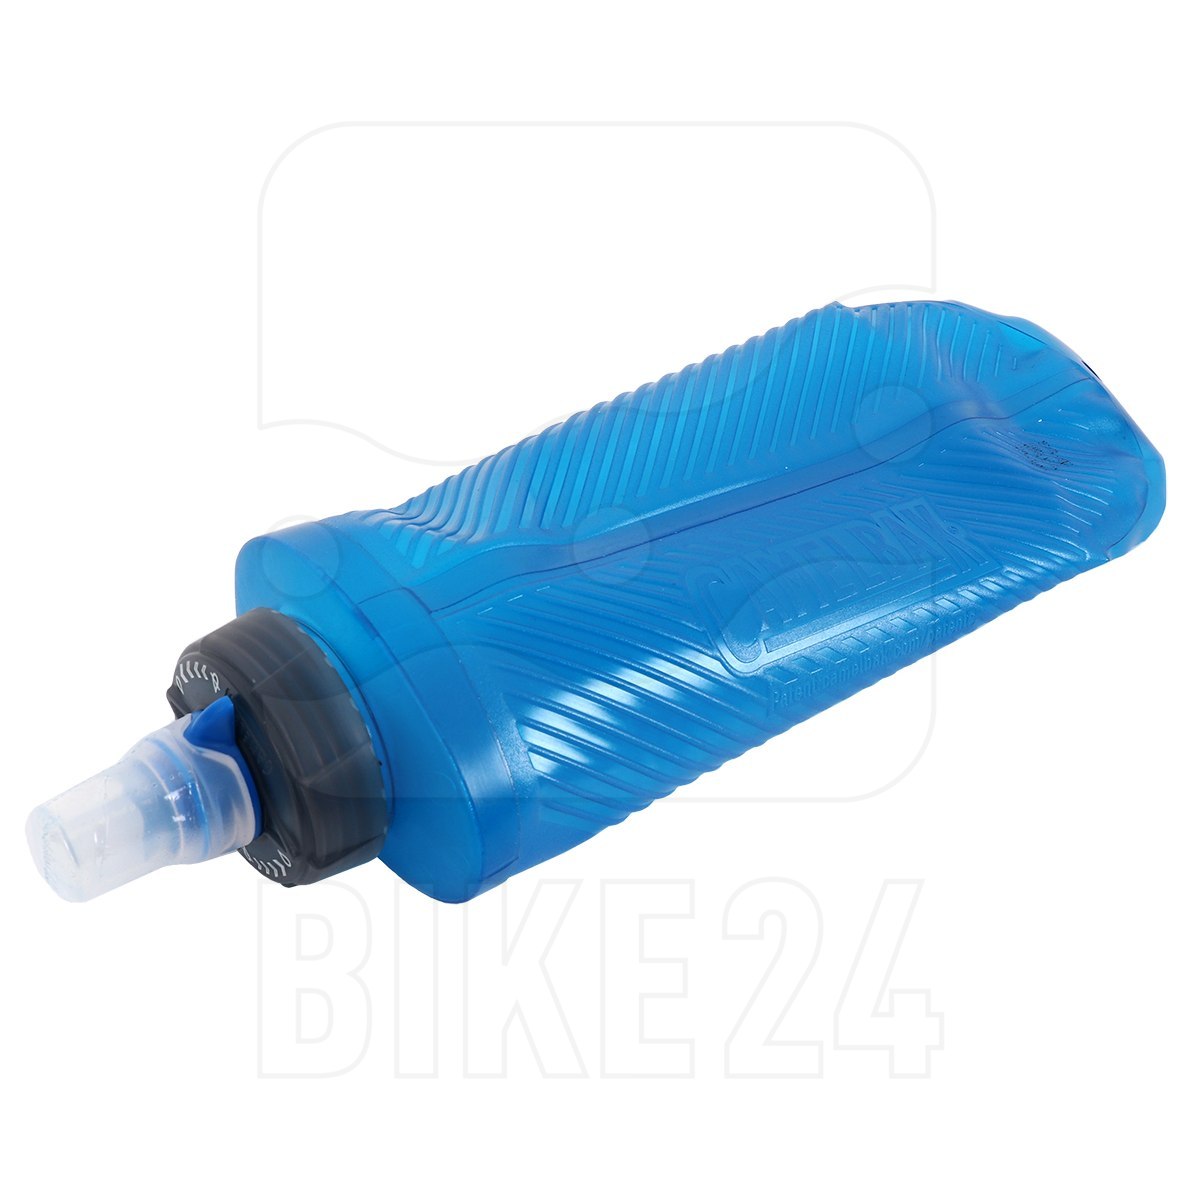 Productfoto van CamelBak Quick Stow Flask Bottle 500ml - Blue